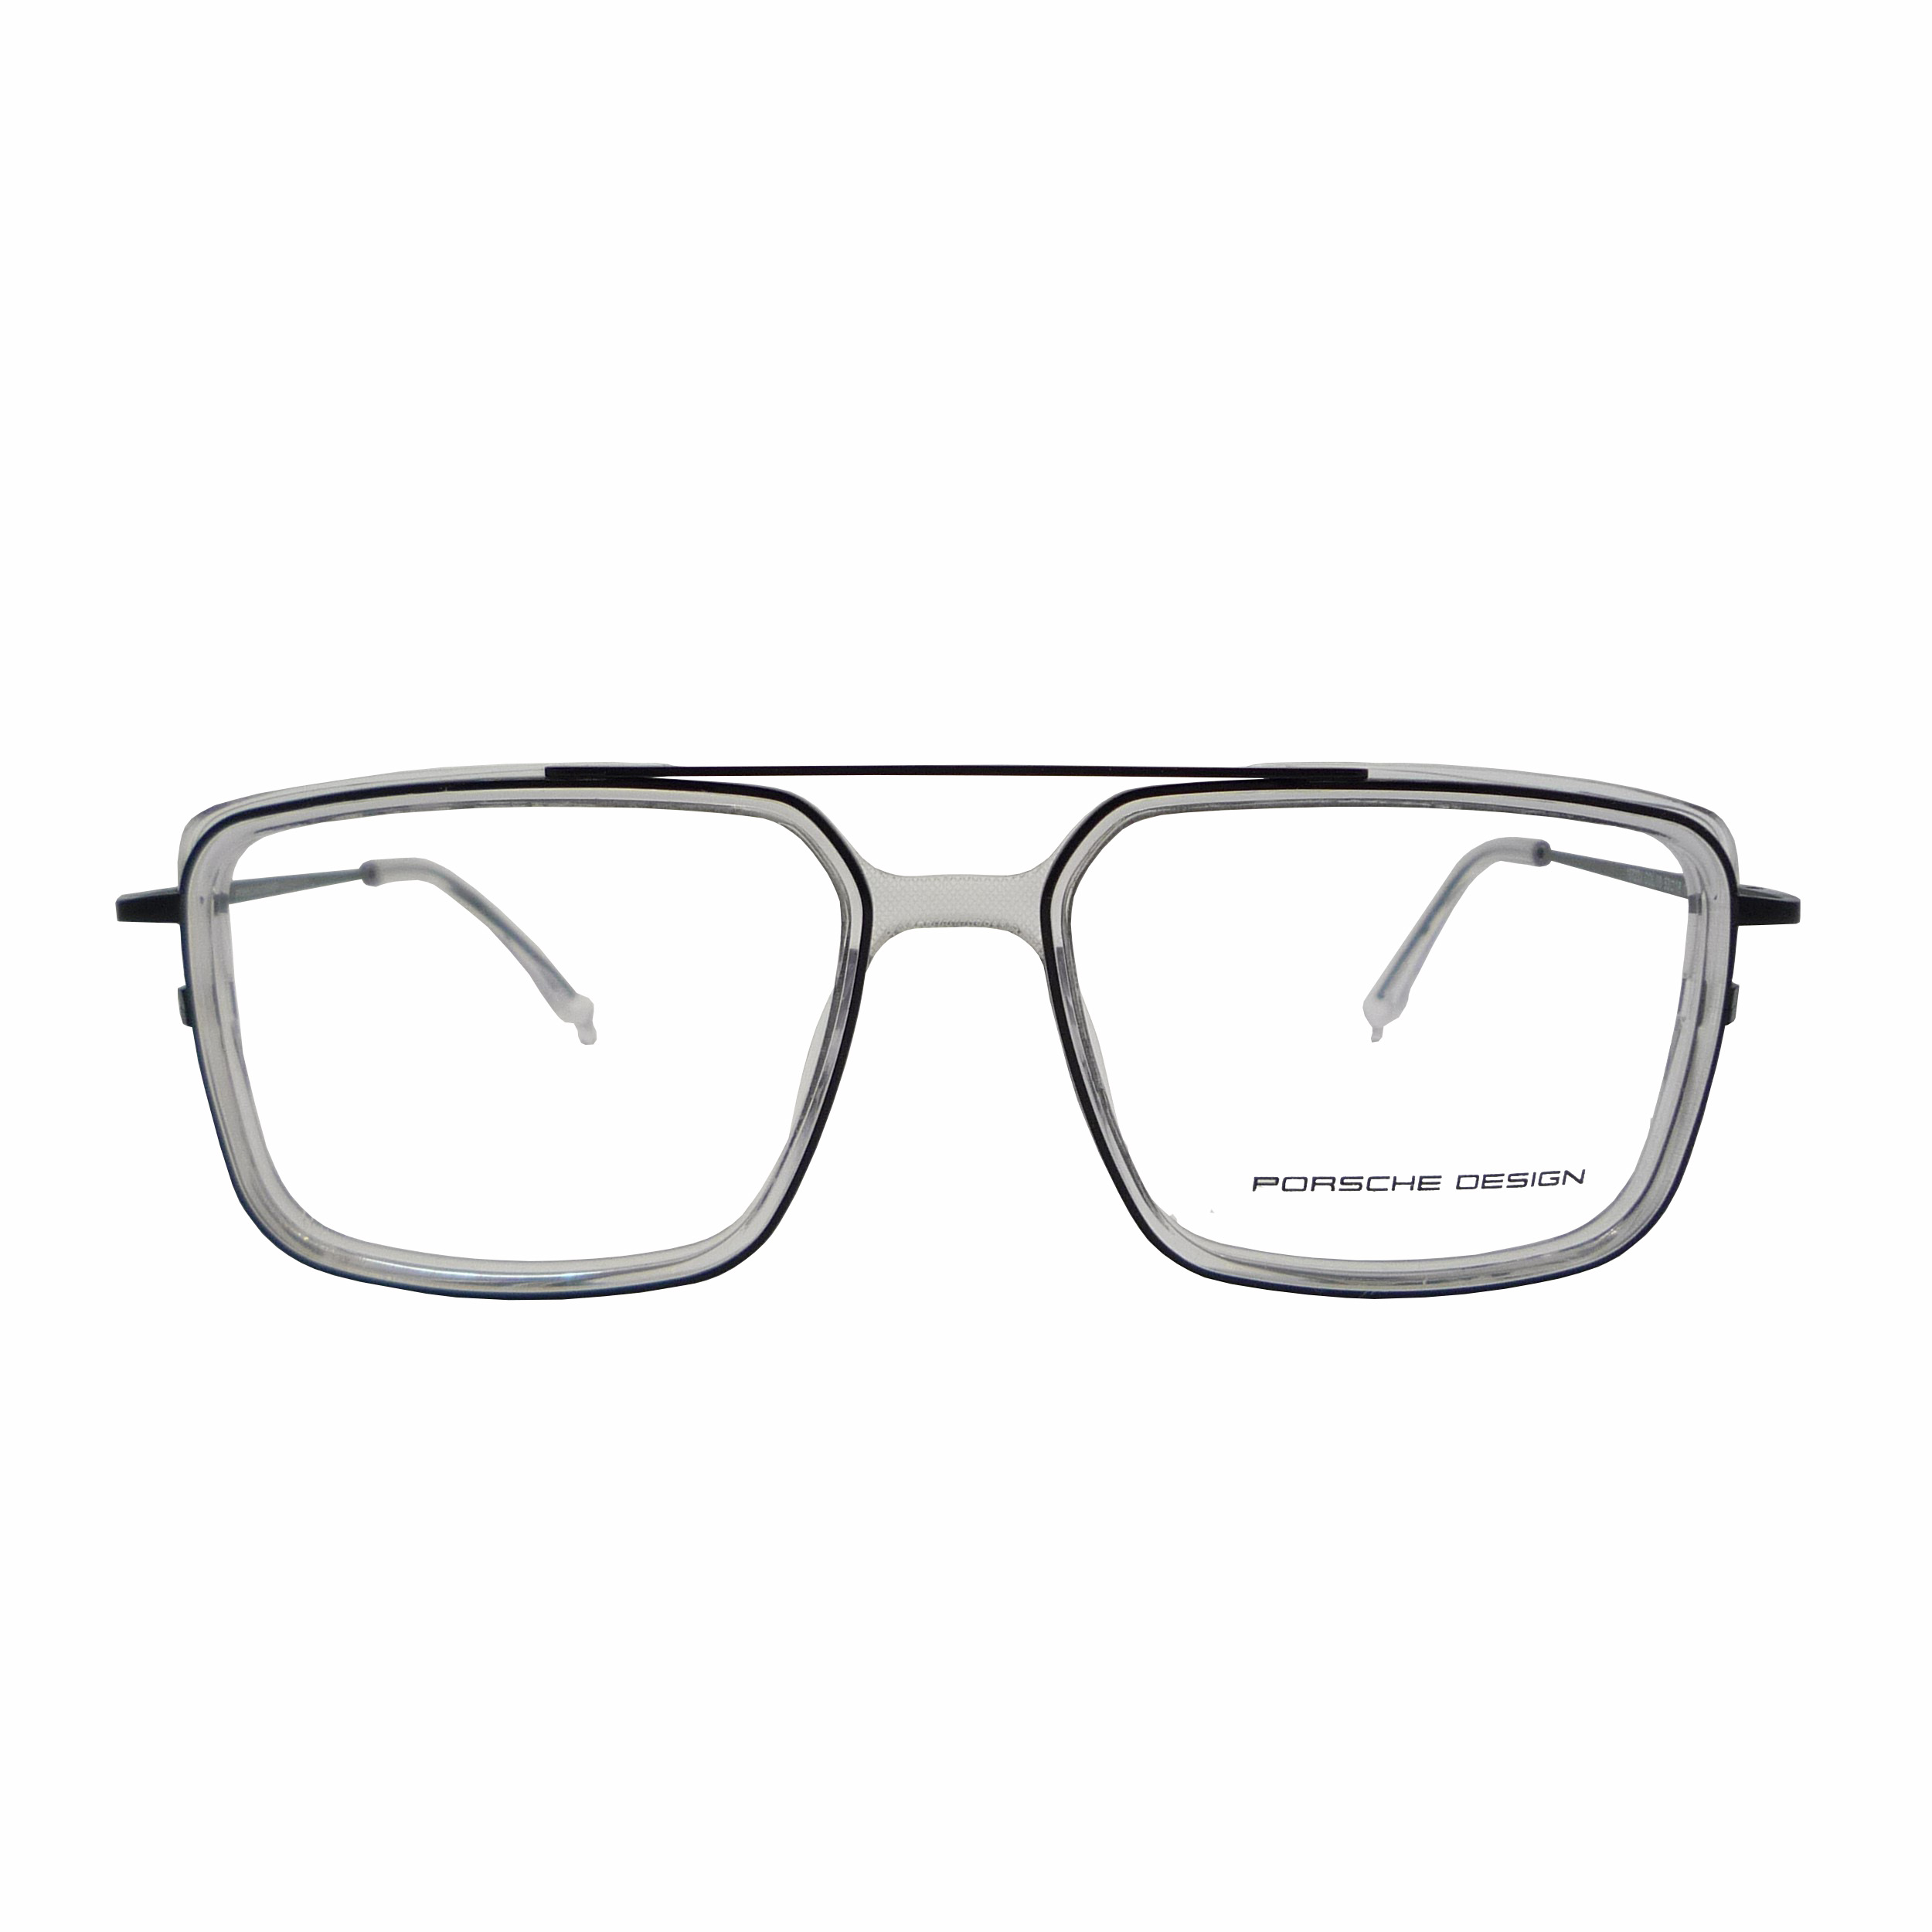 فریم عینک طبی پورش دیزاین مدل T2048-10723JC8